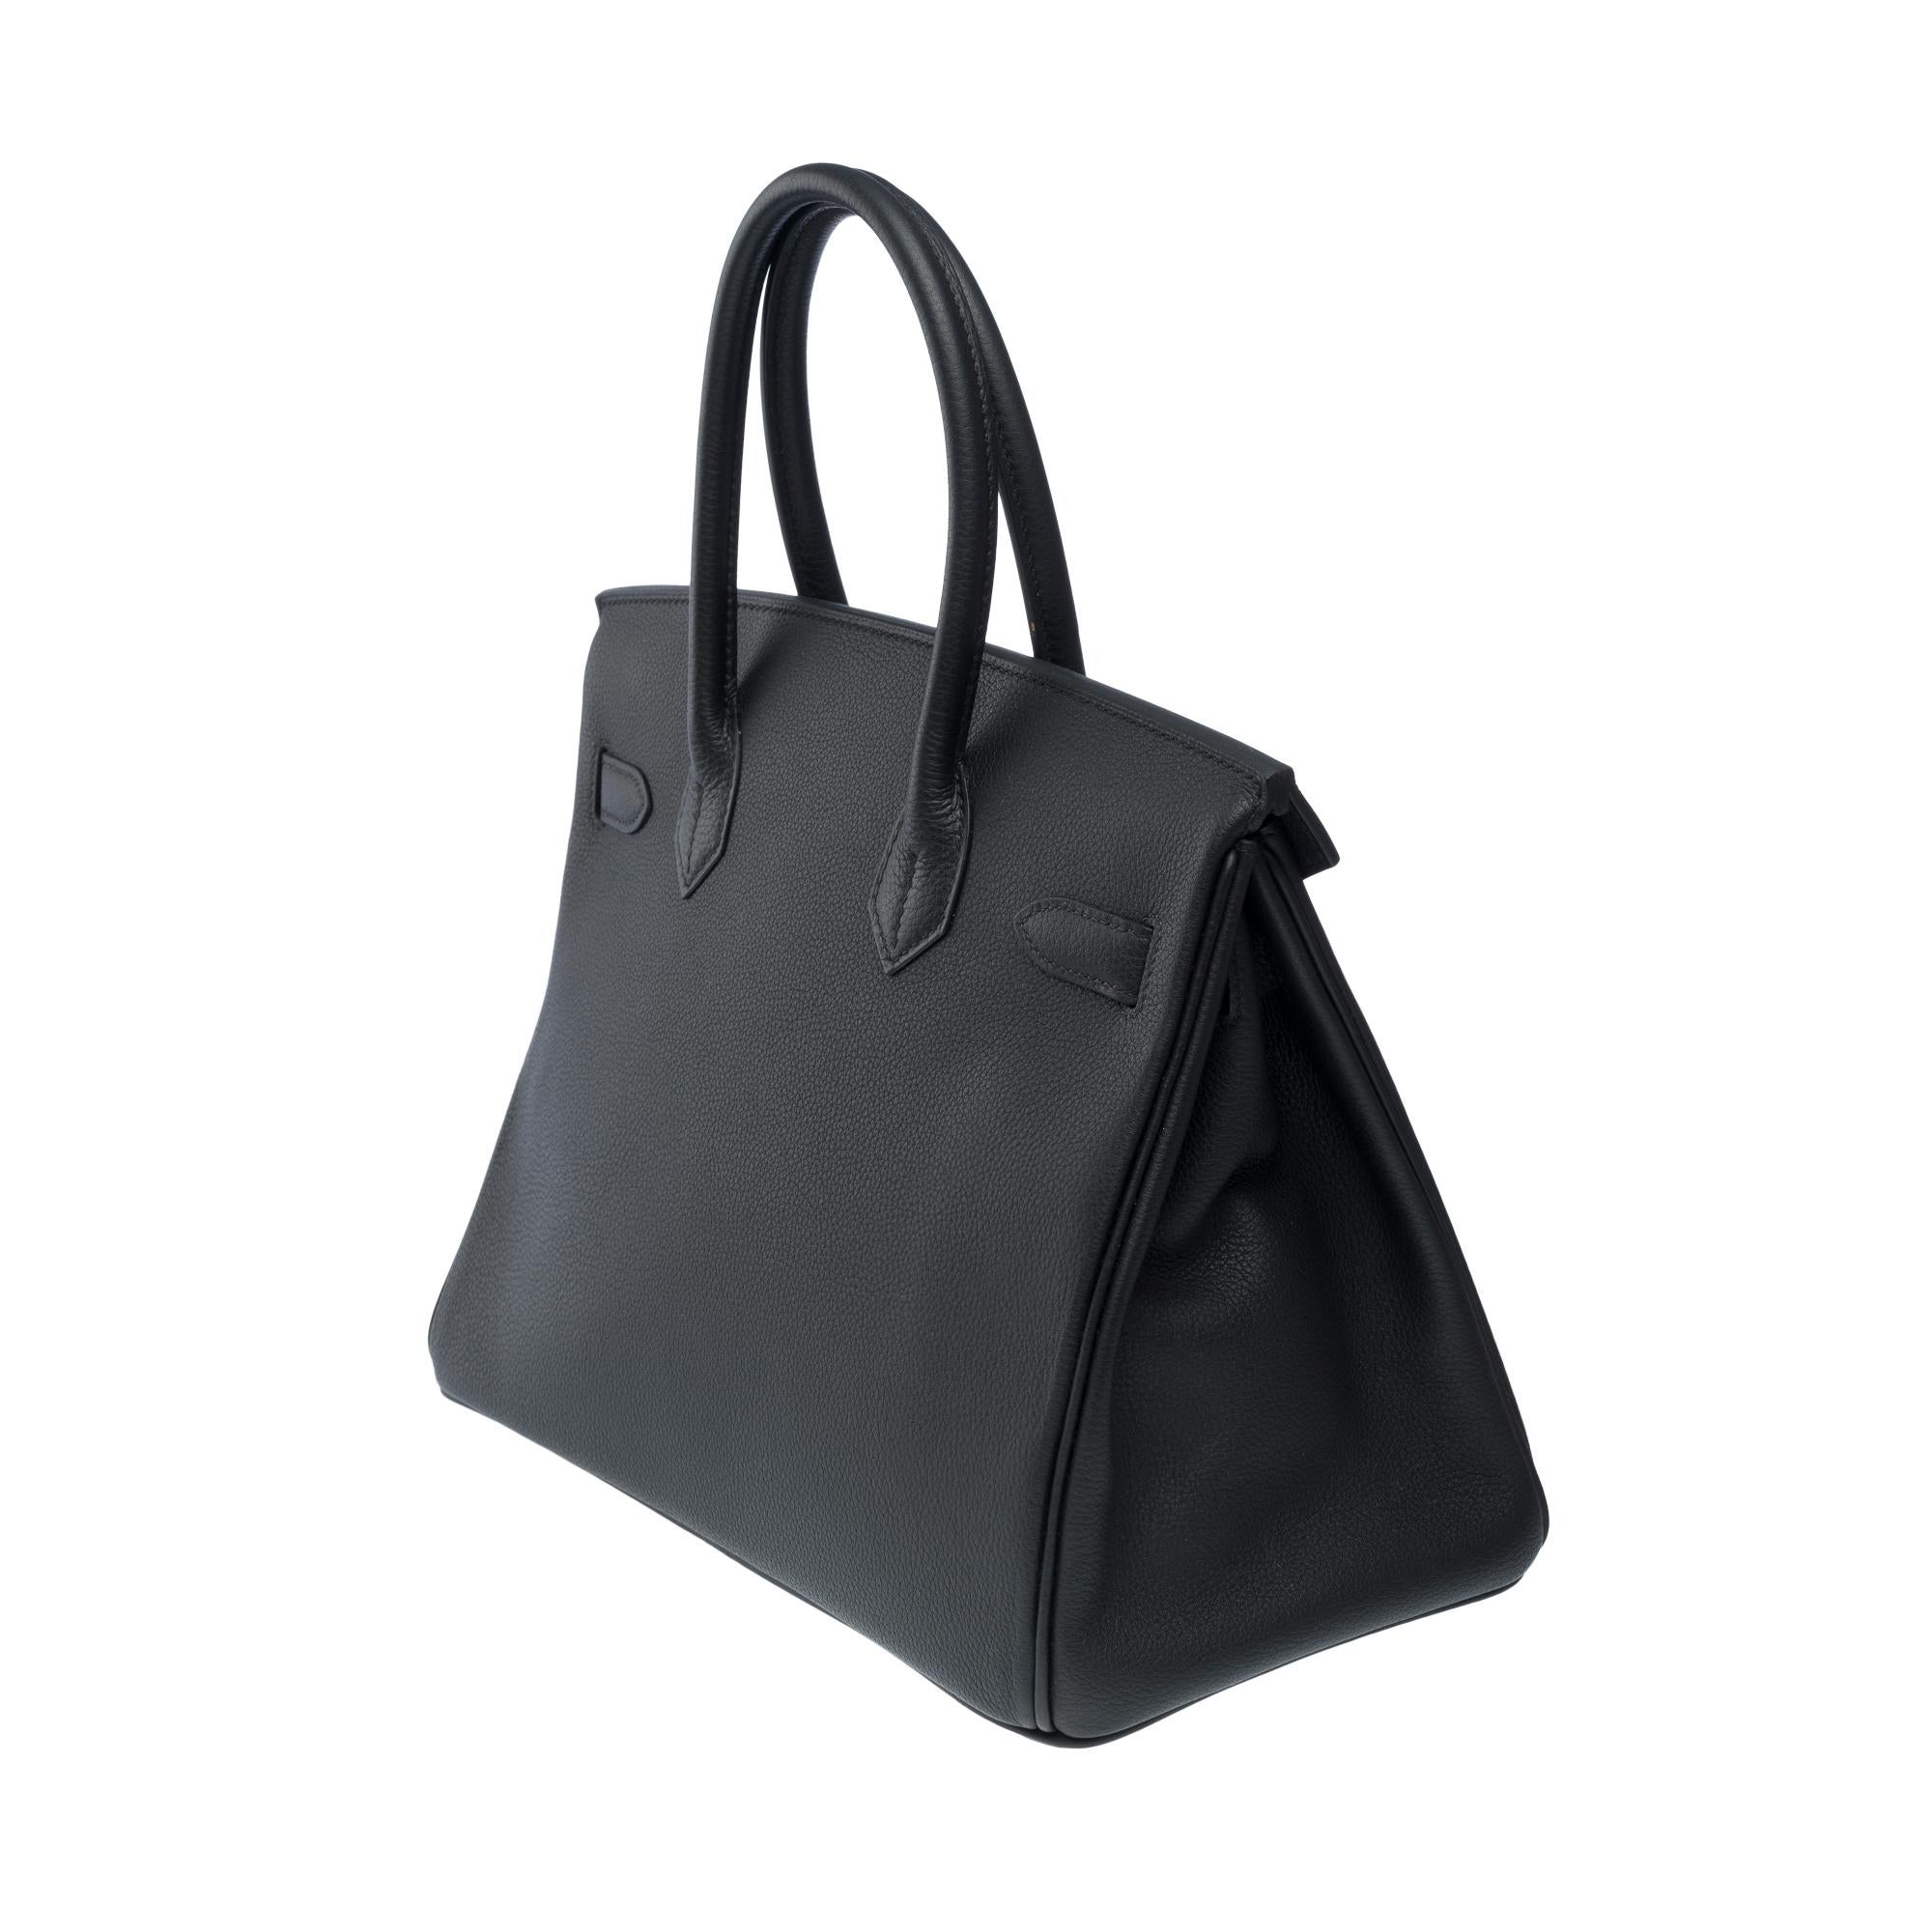 Splendid Hermes Birkin 30 handbag in Black Togo leather, SHW For Sale 1